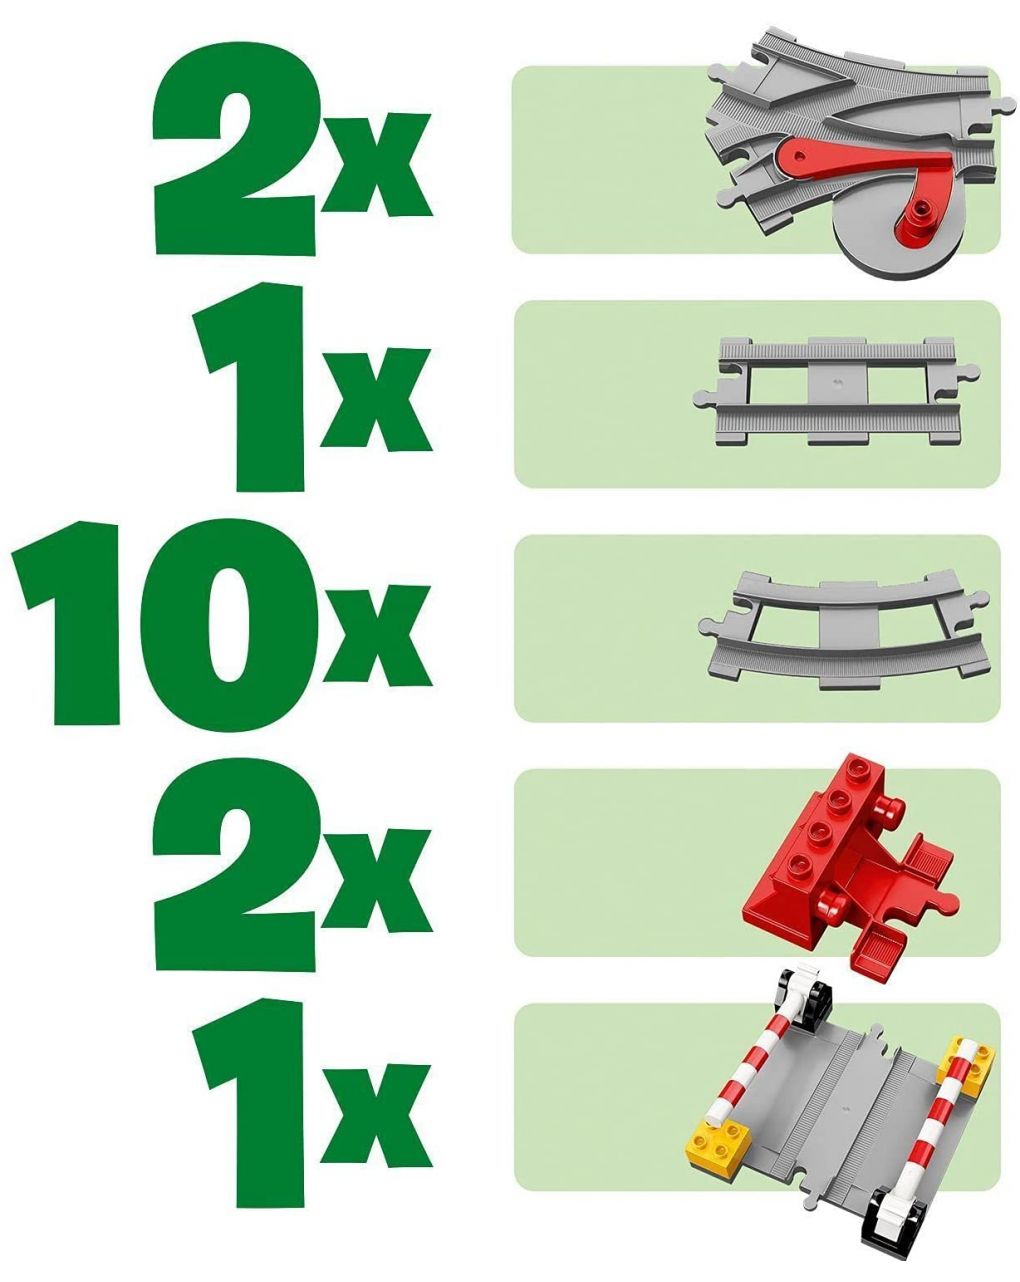 Lego duplo σιδηροδρομικές τροχιές 10882 - Lego, LEGO DUPLO